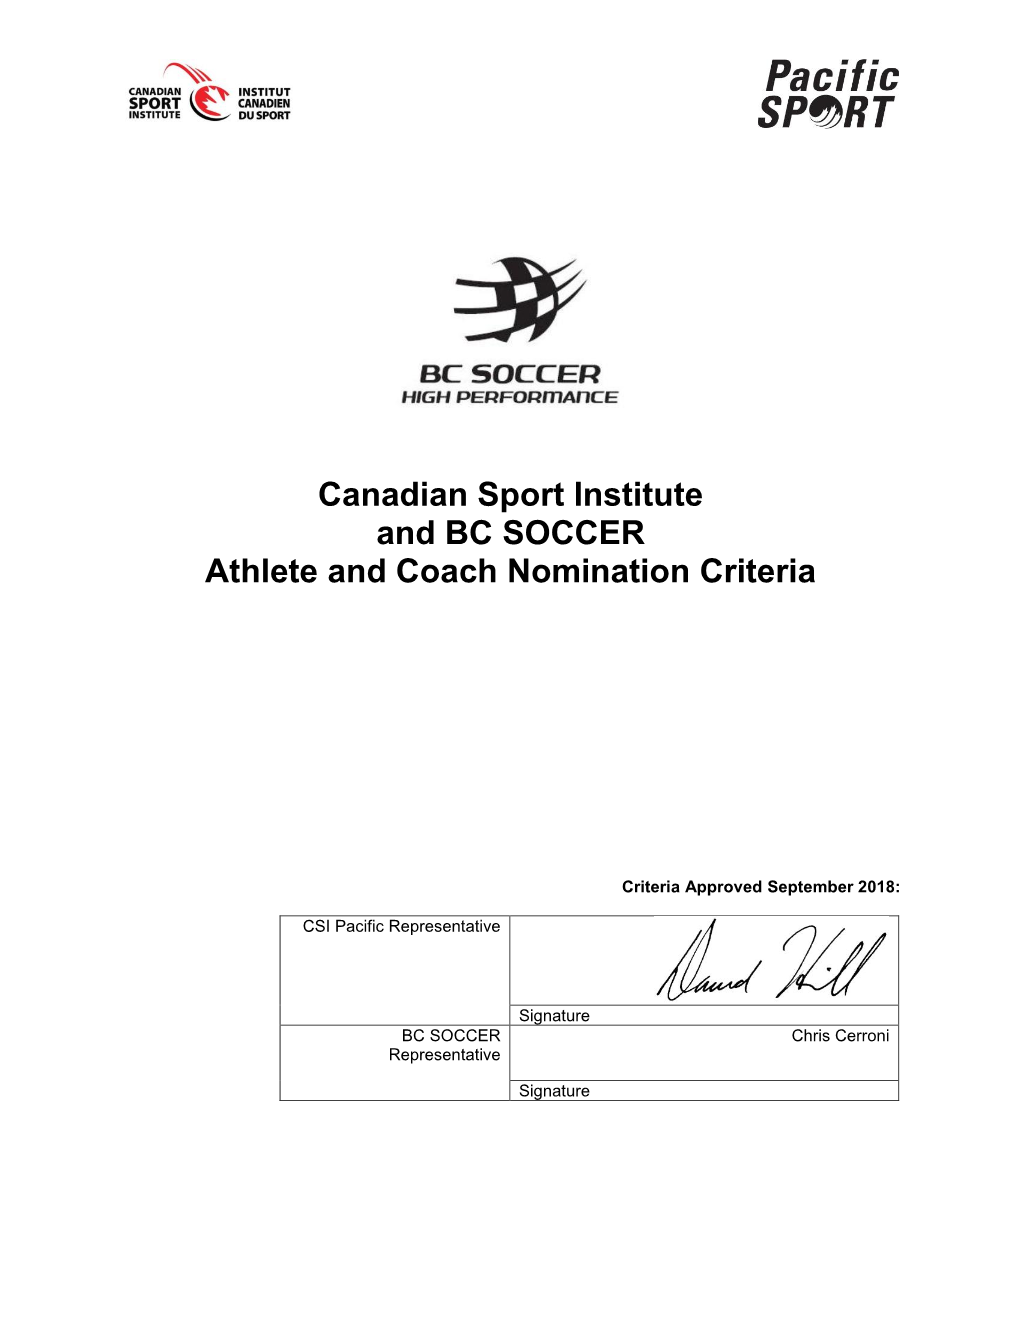 BC SOCCER Athlete and Coach Nomination Criteria